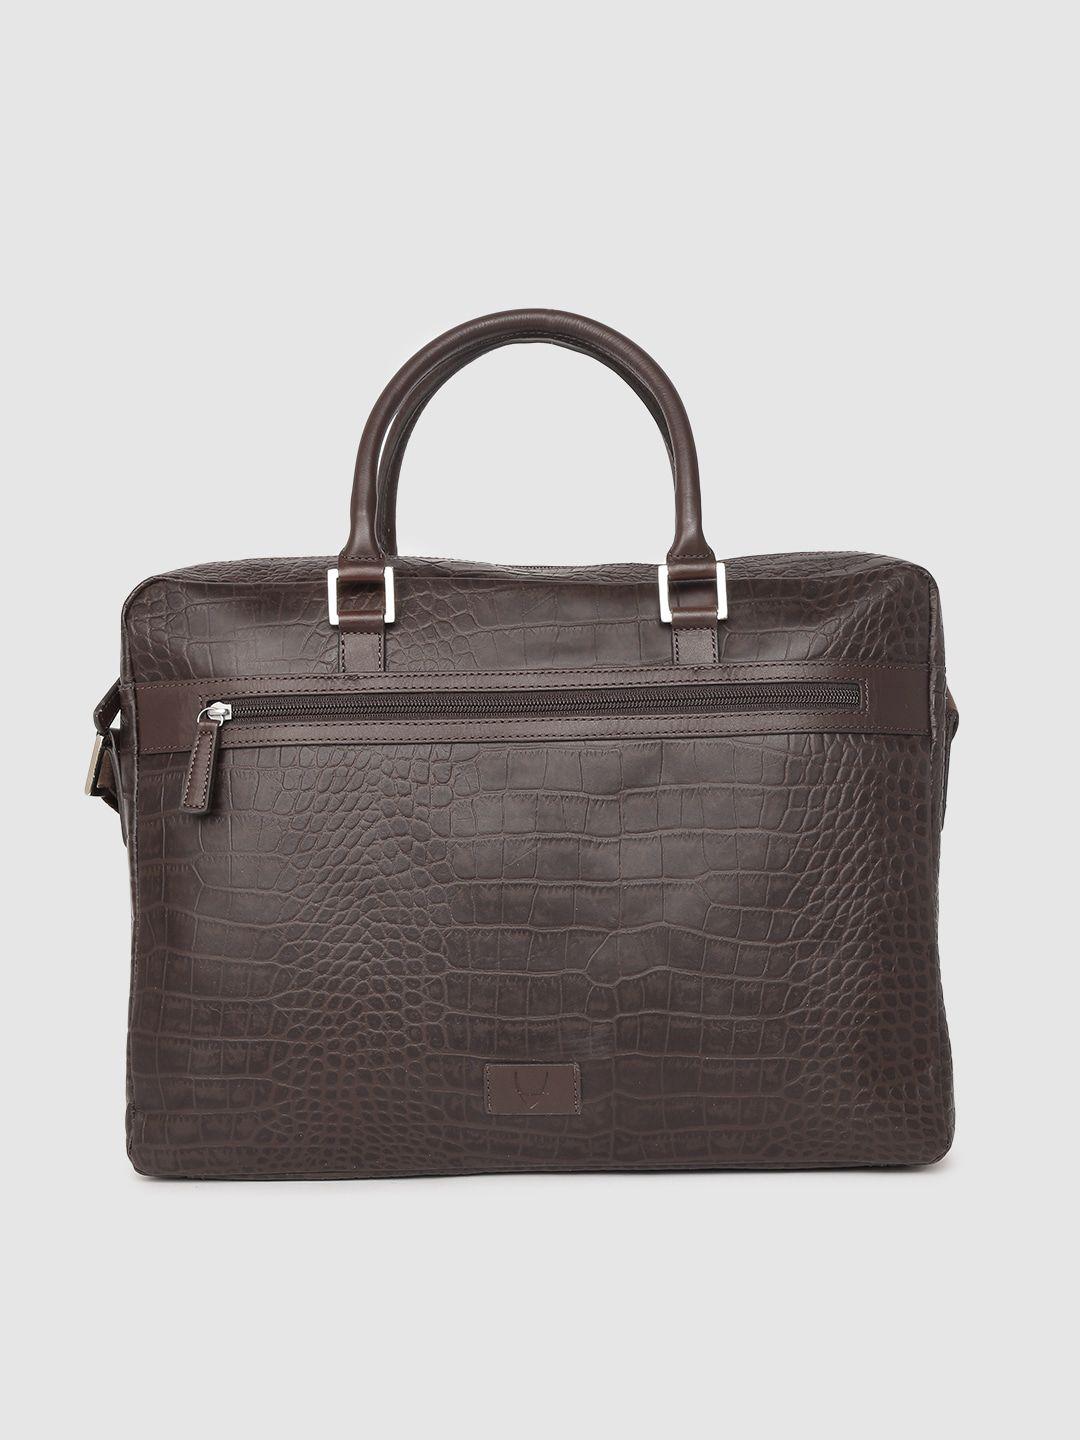 hidesign men brown textured leather laptop bag